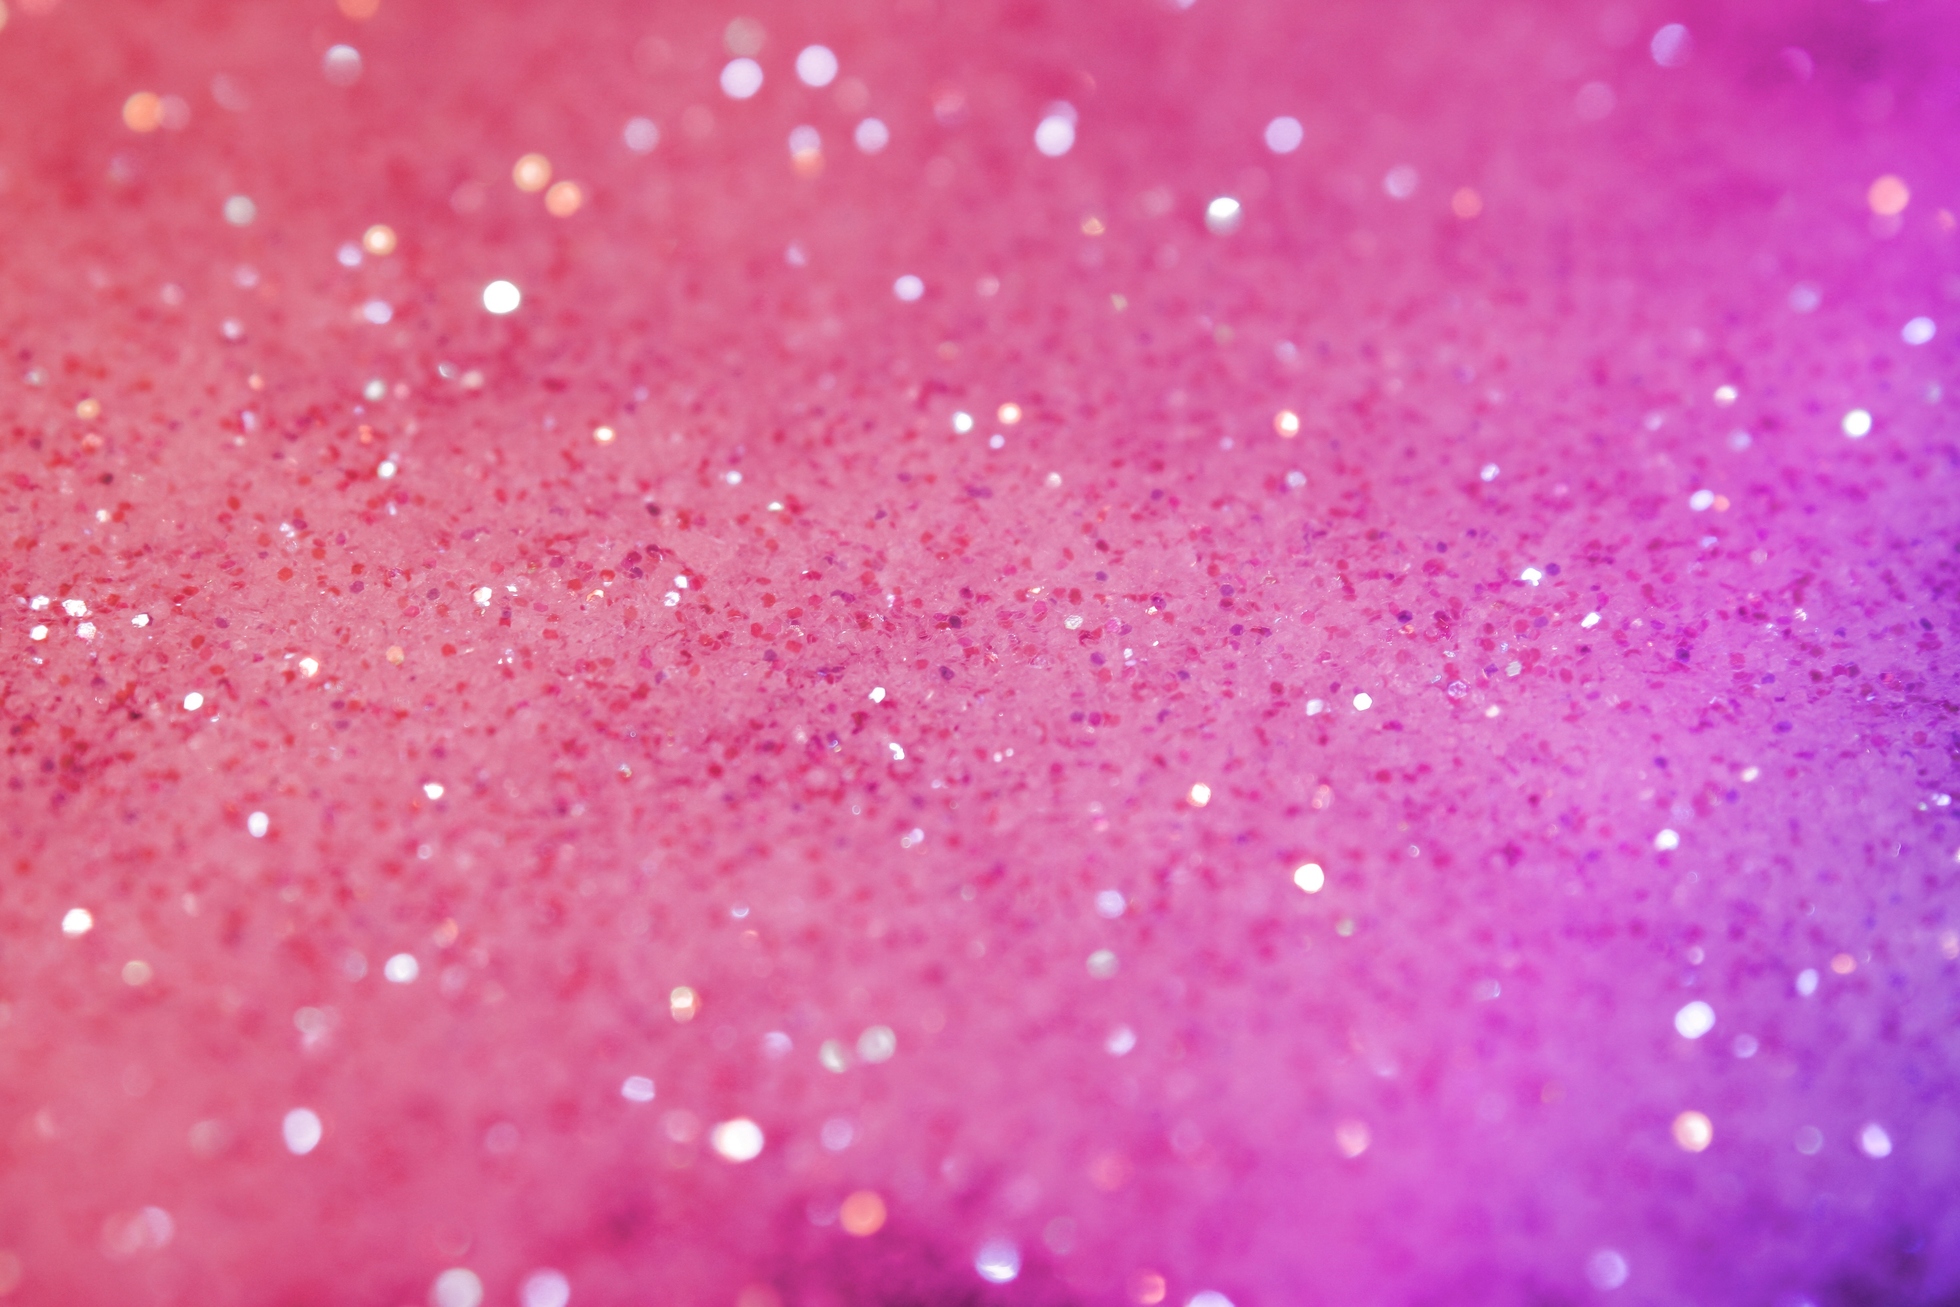 Home Abstract Pink Glitter Desktop Backgrounds